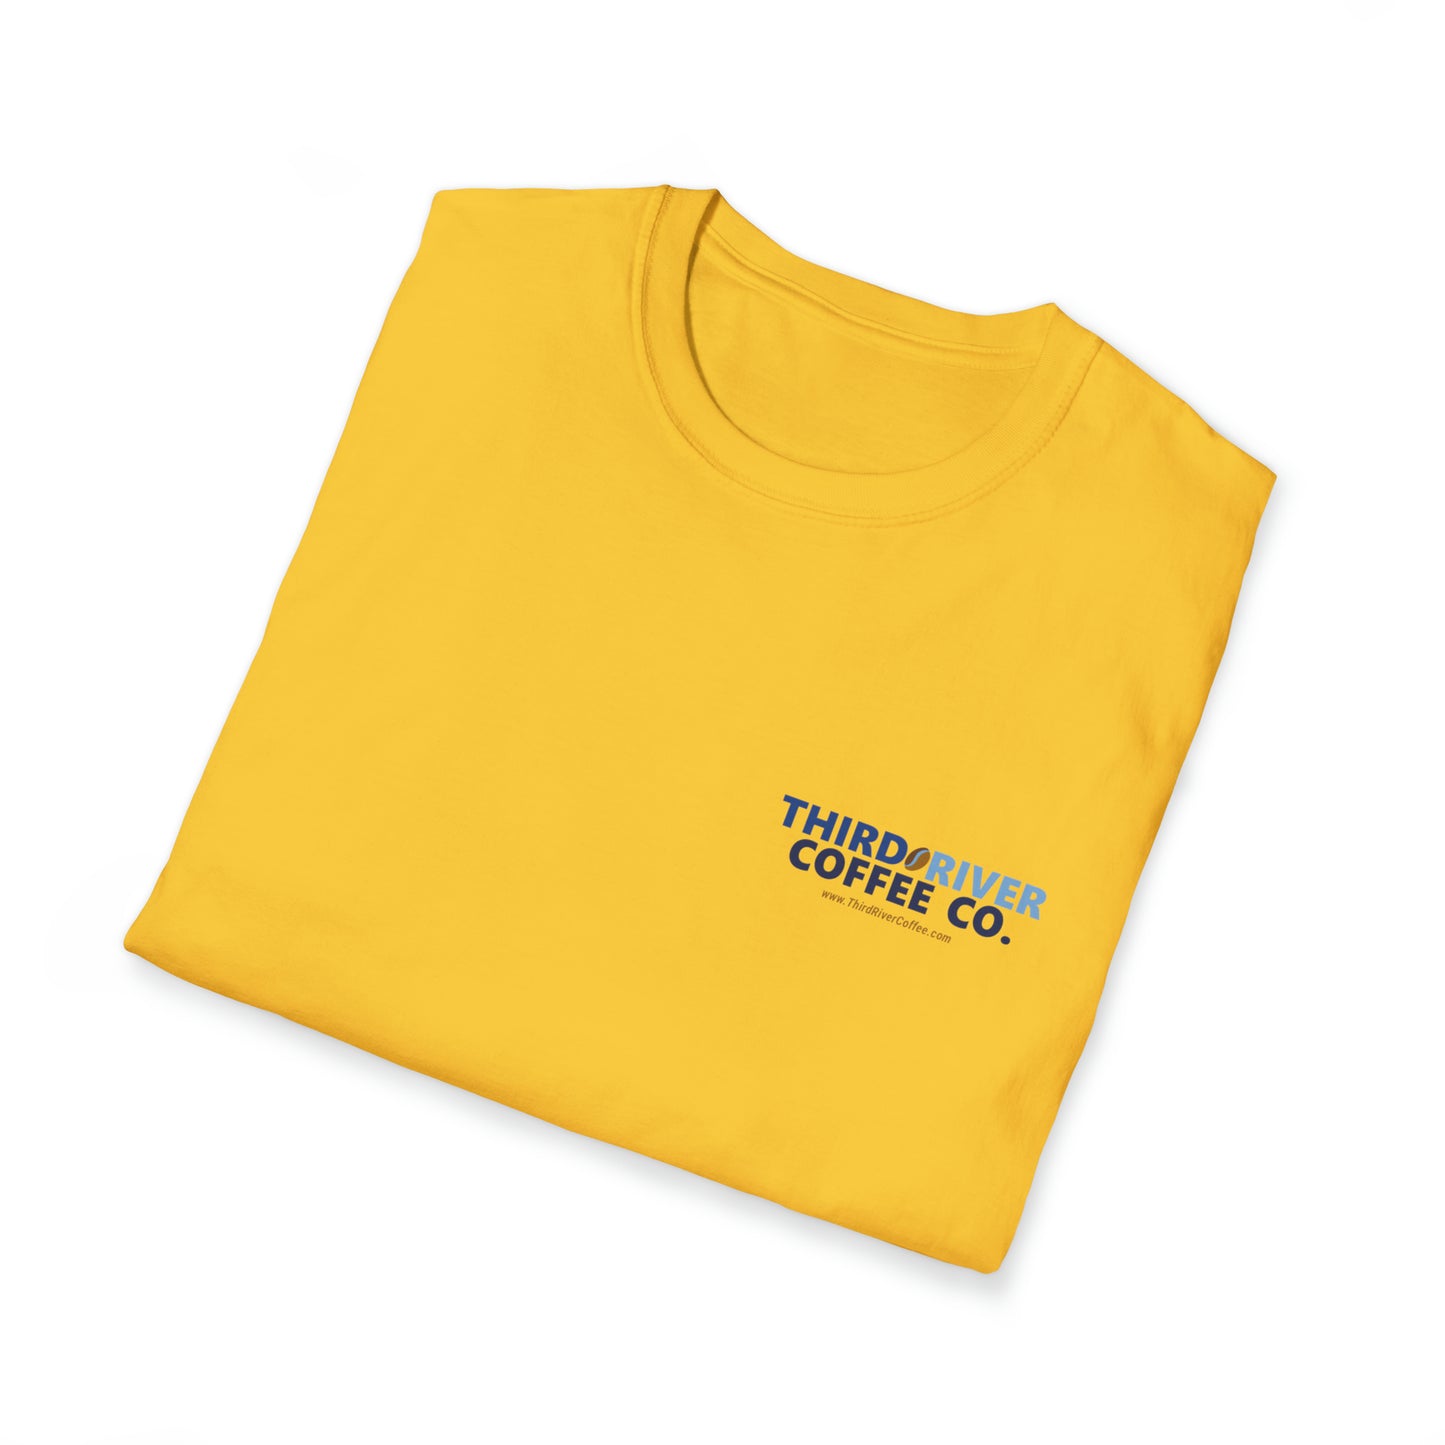 Third River Coffee Golden Boy T-shirt yellow